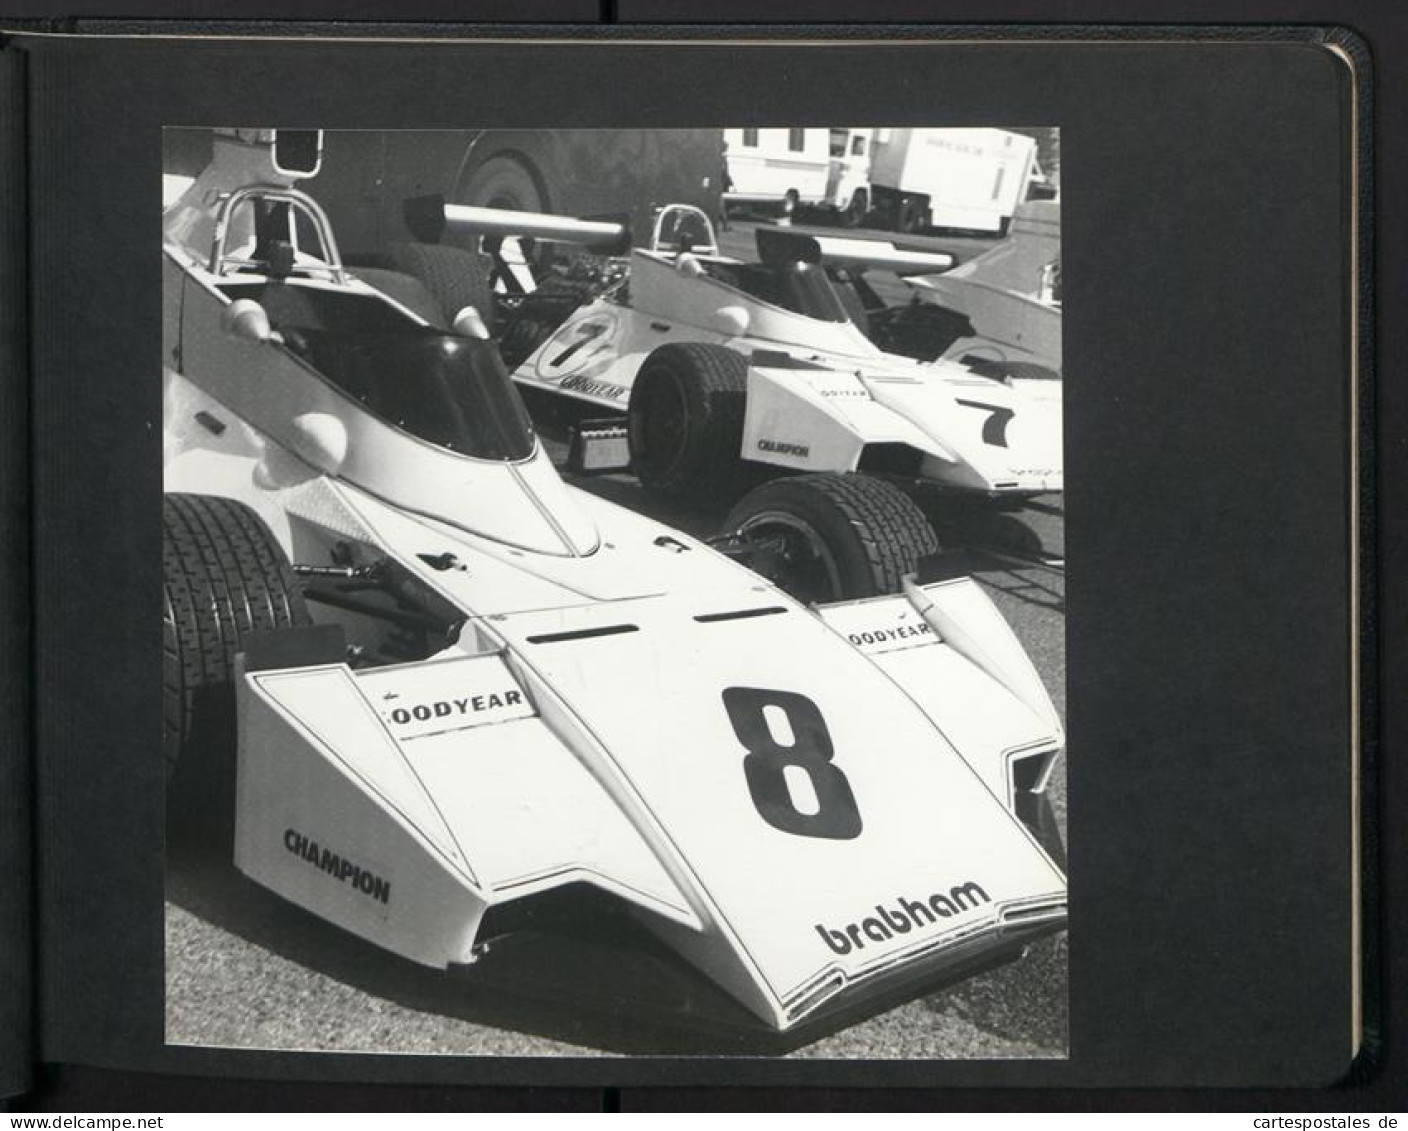 Fotoalbum mit 79 Fotografien John Player Grand Prix Silverstone 1973-1977, Ferrari, Tyrrell Ford, Brabham, BMW, Porche 